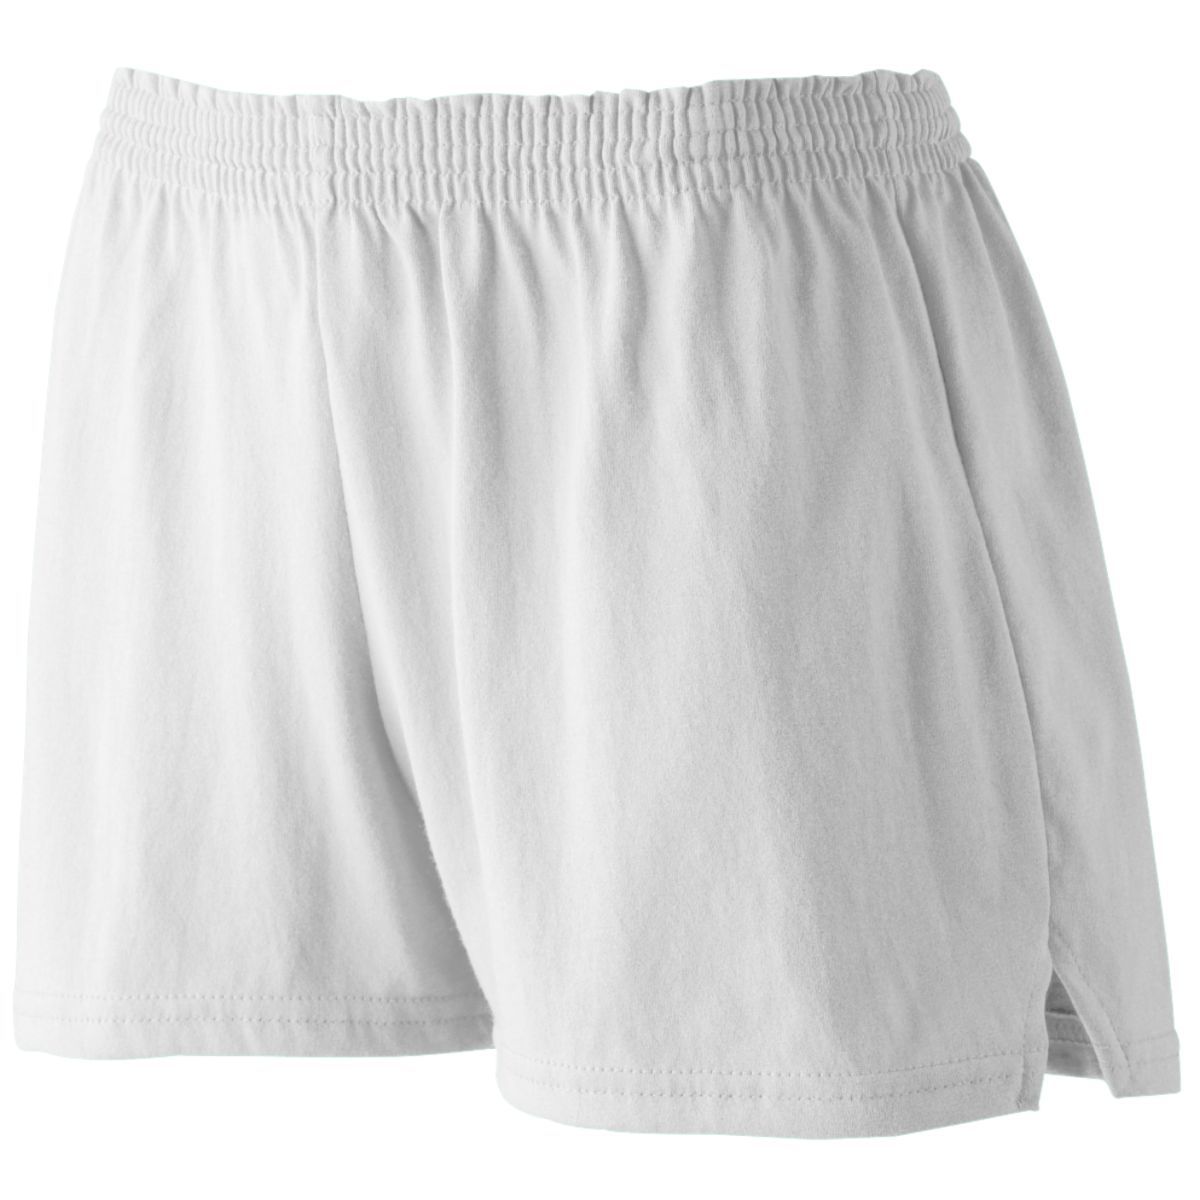 Ladies Junior Fit Jersey Shorts 987